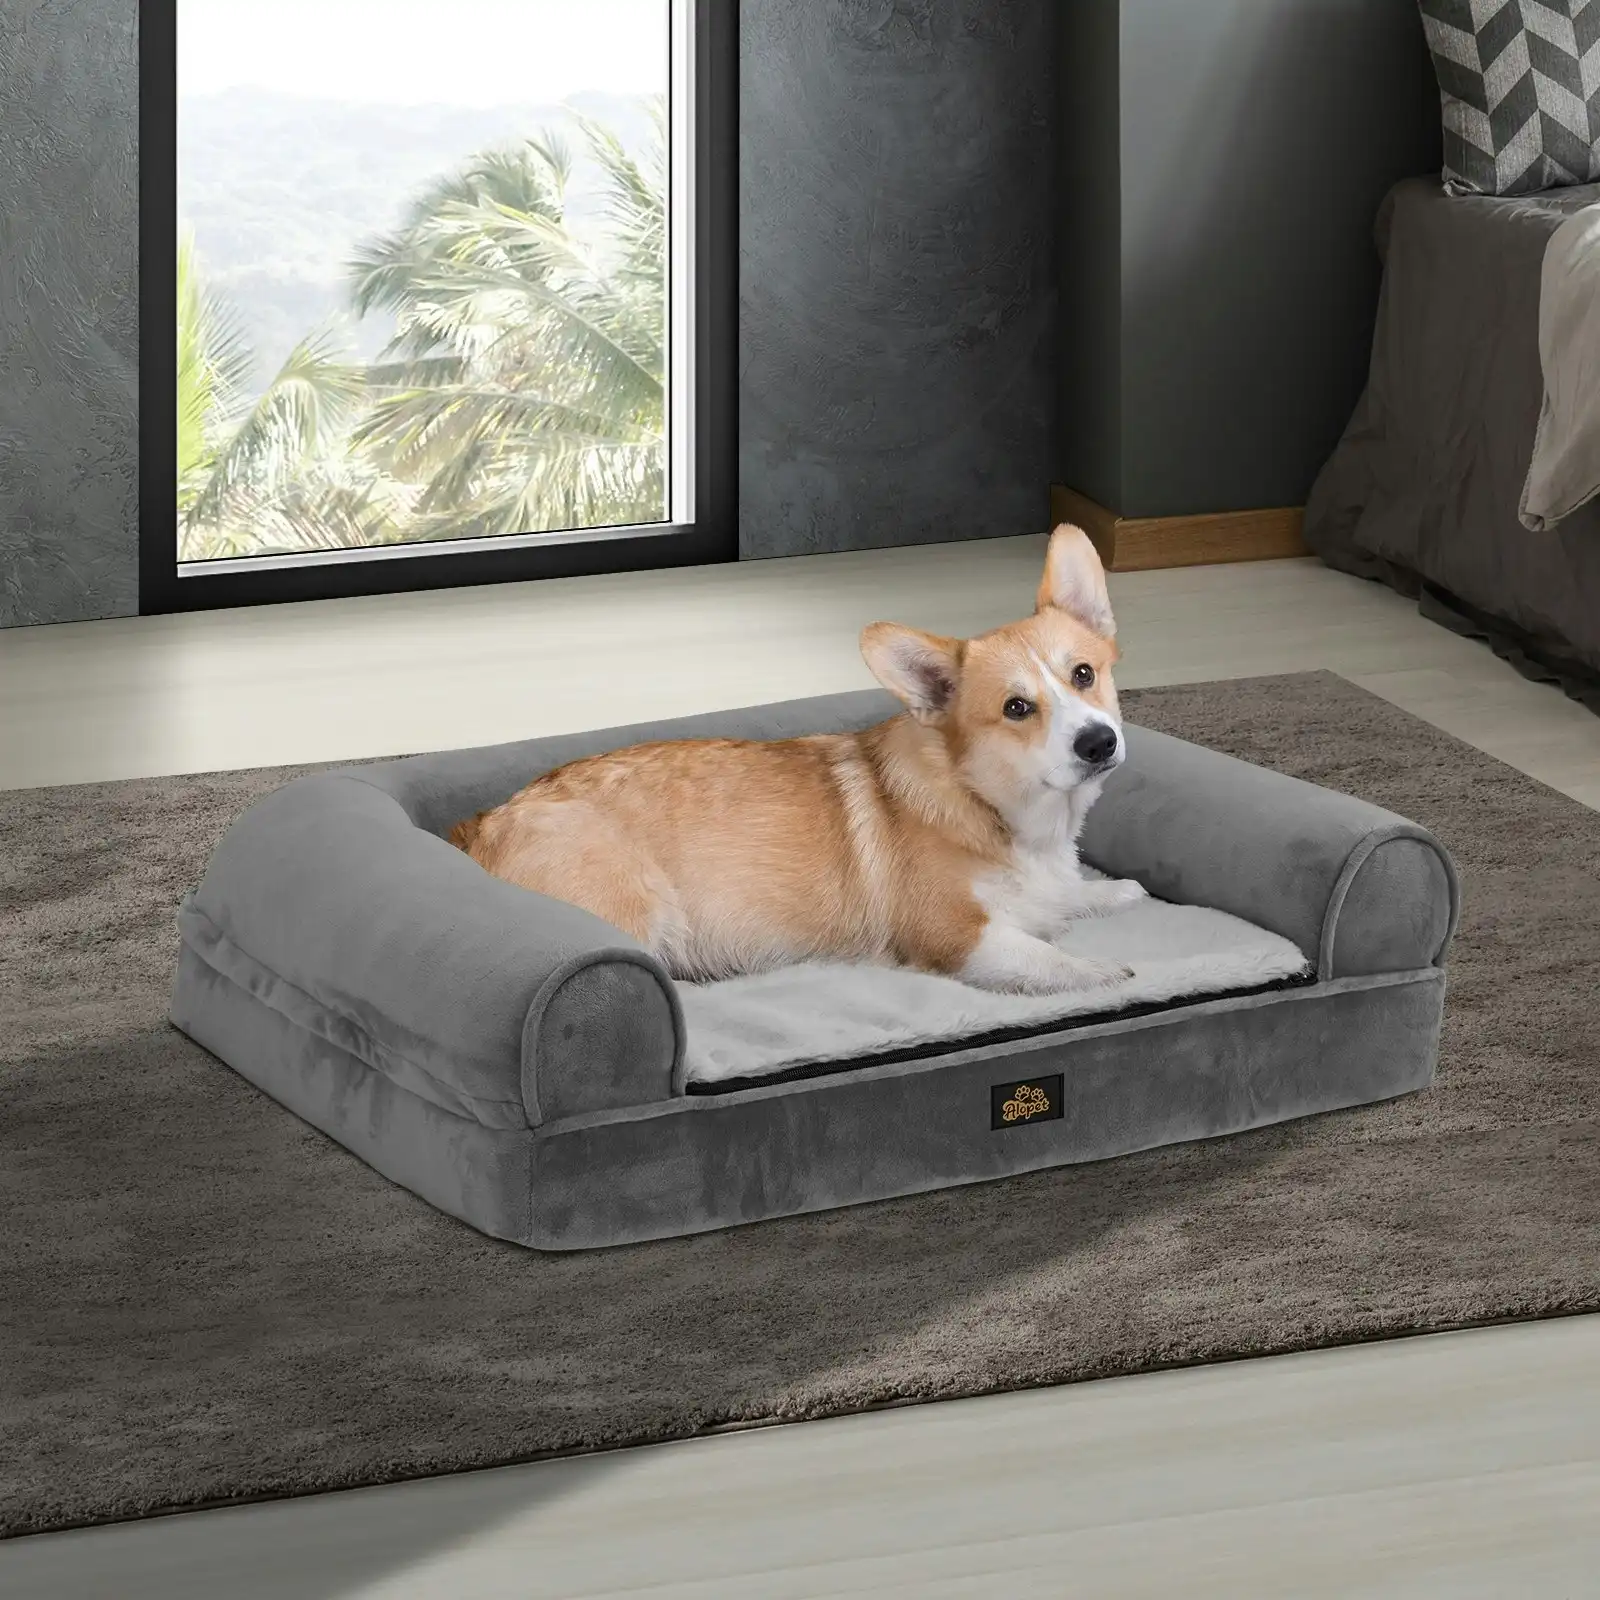 Alopet Pet Dog Calming Bed Memory Foam Orthopedic Cat Sofa Removable Cover Medium